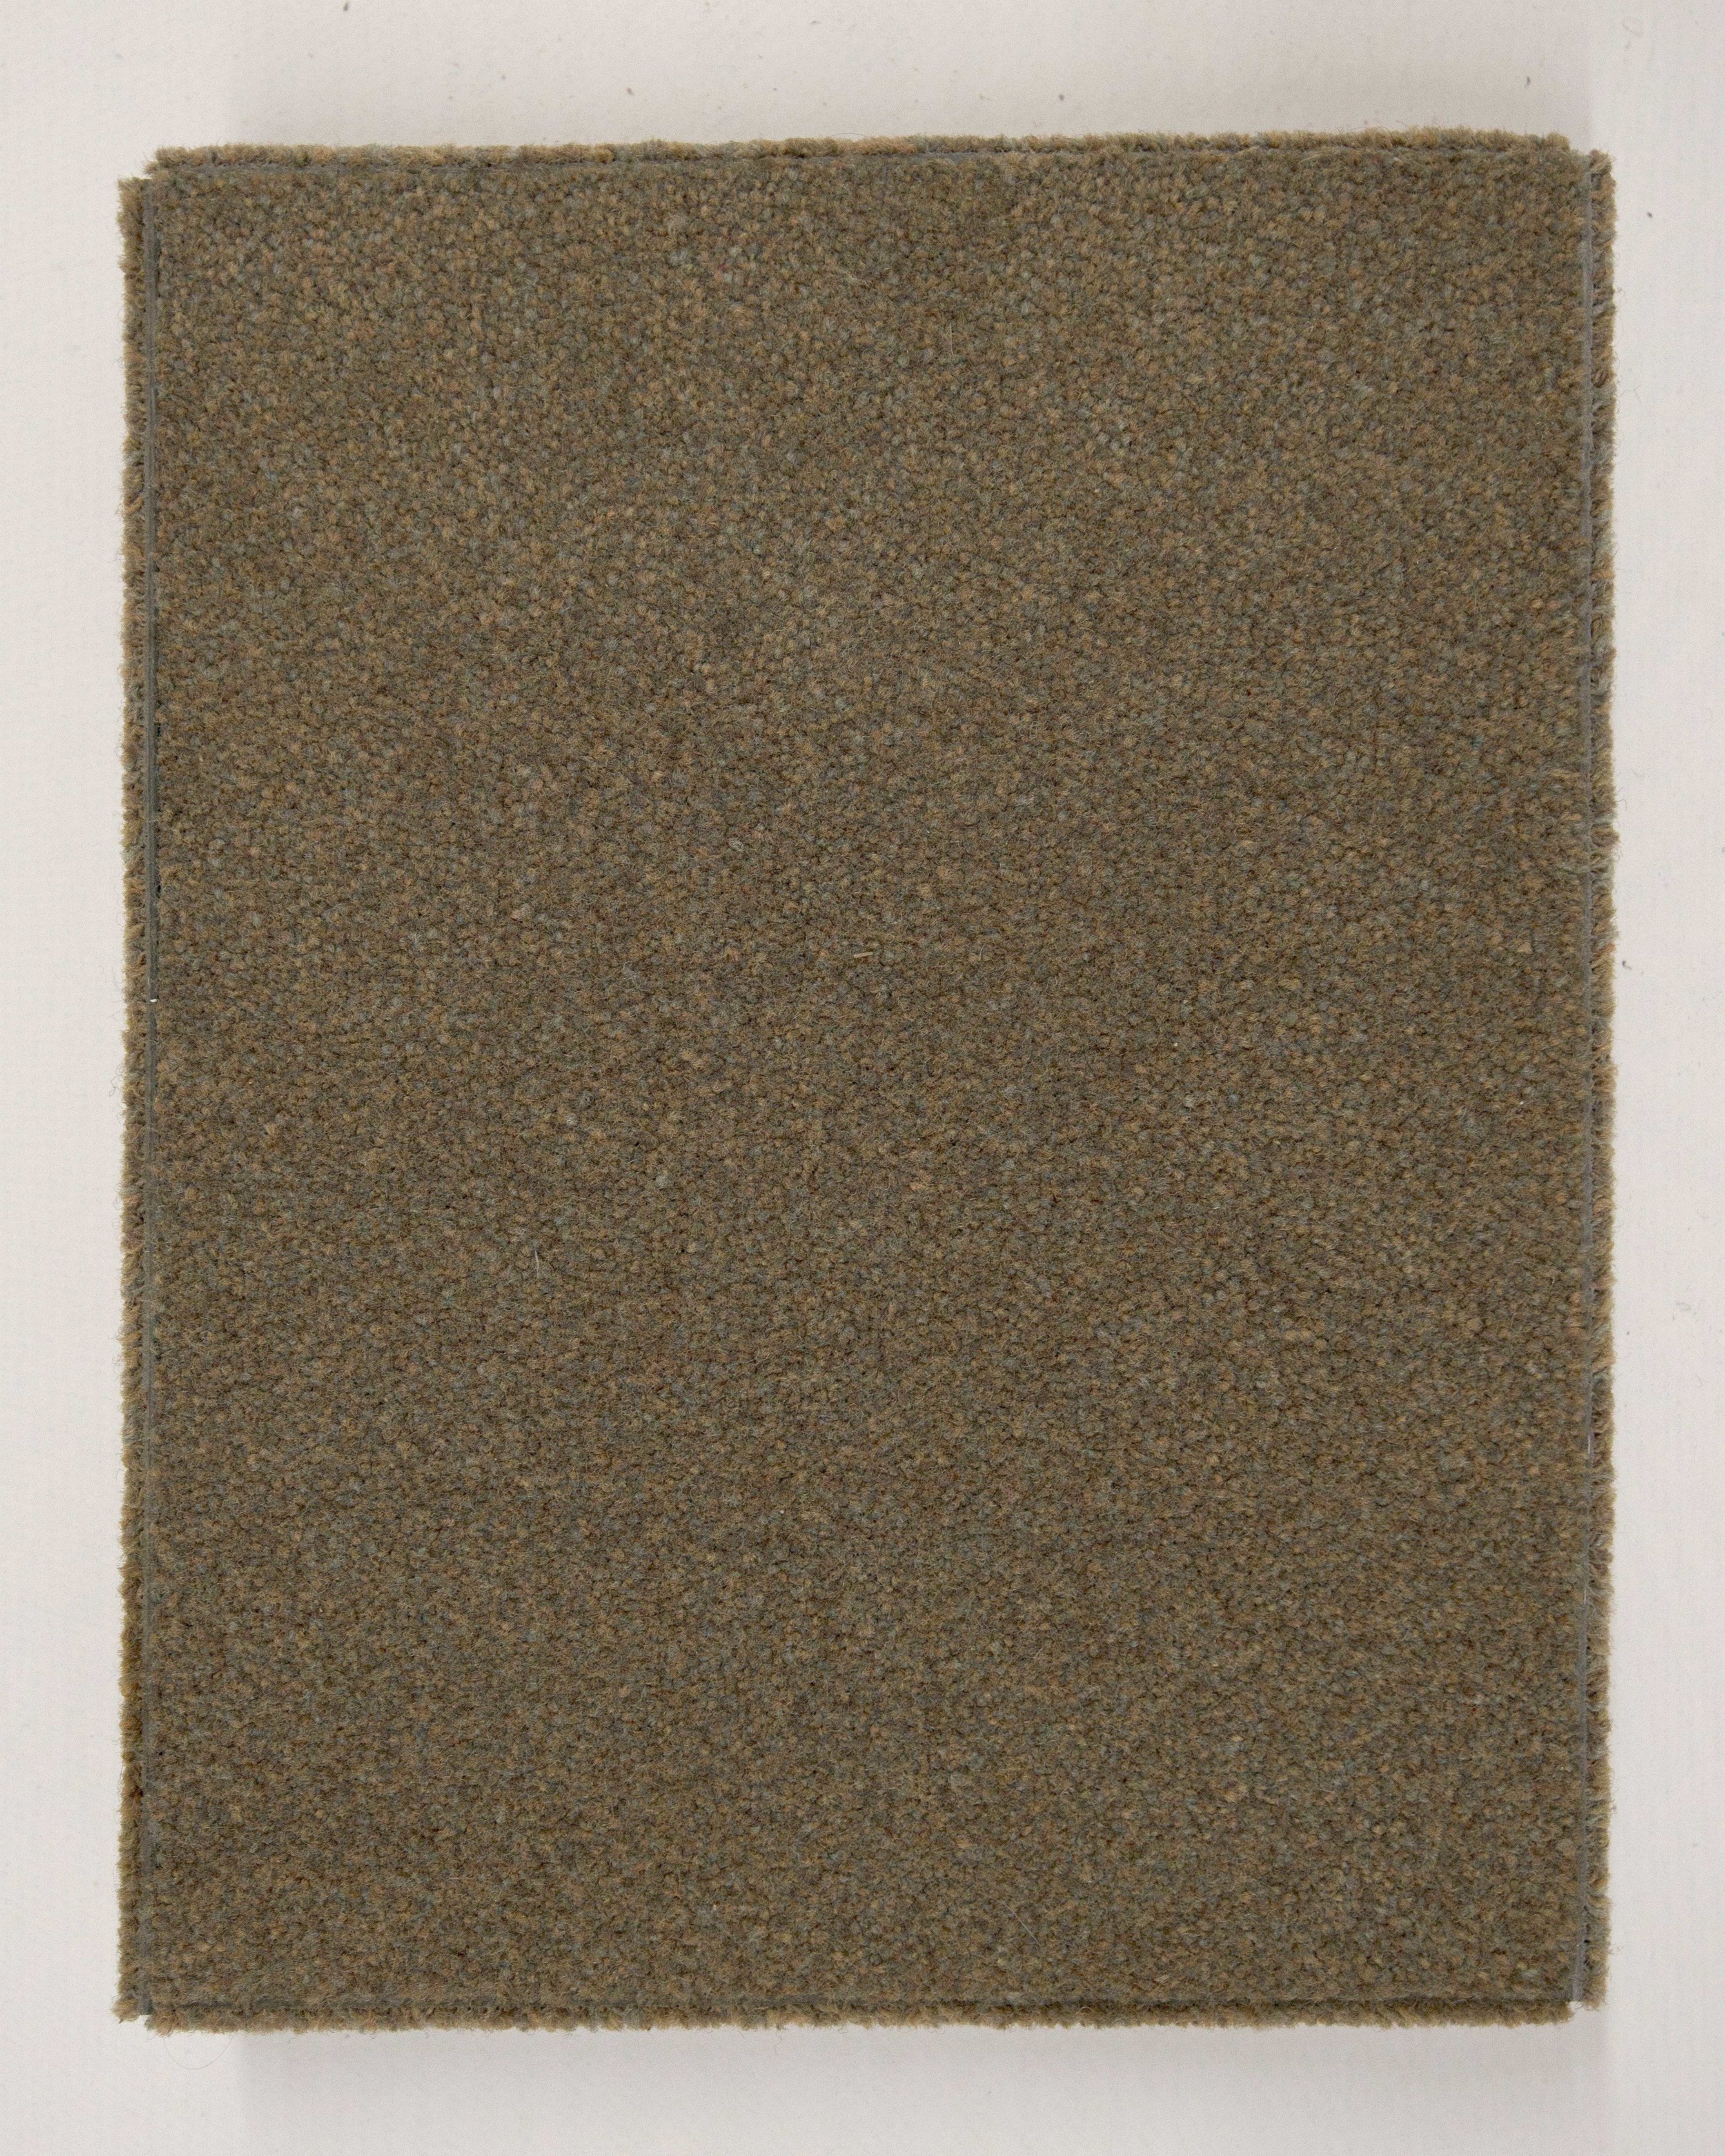  2016 carpet on cradled wood panel 10" x 8" 